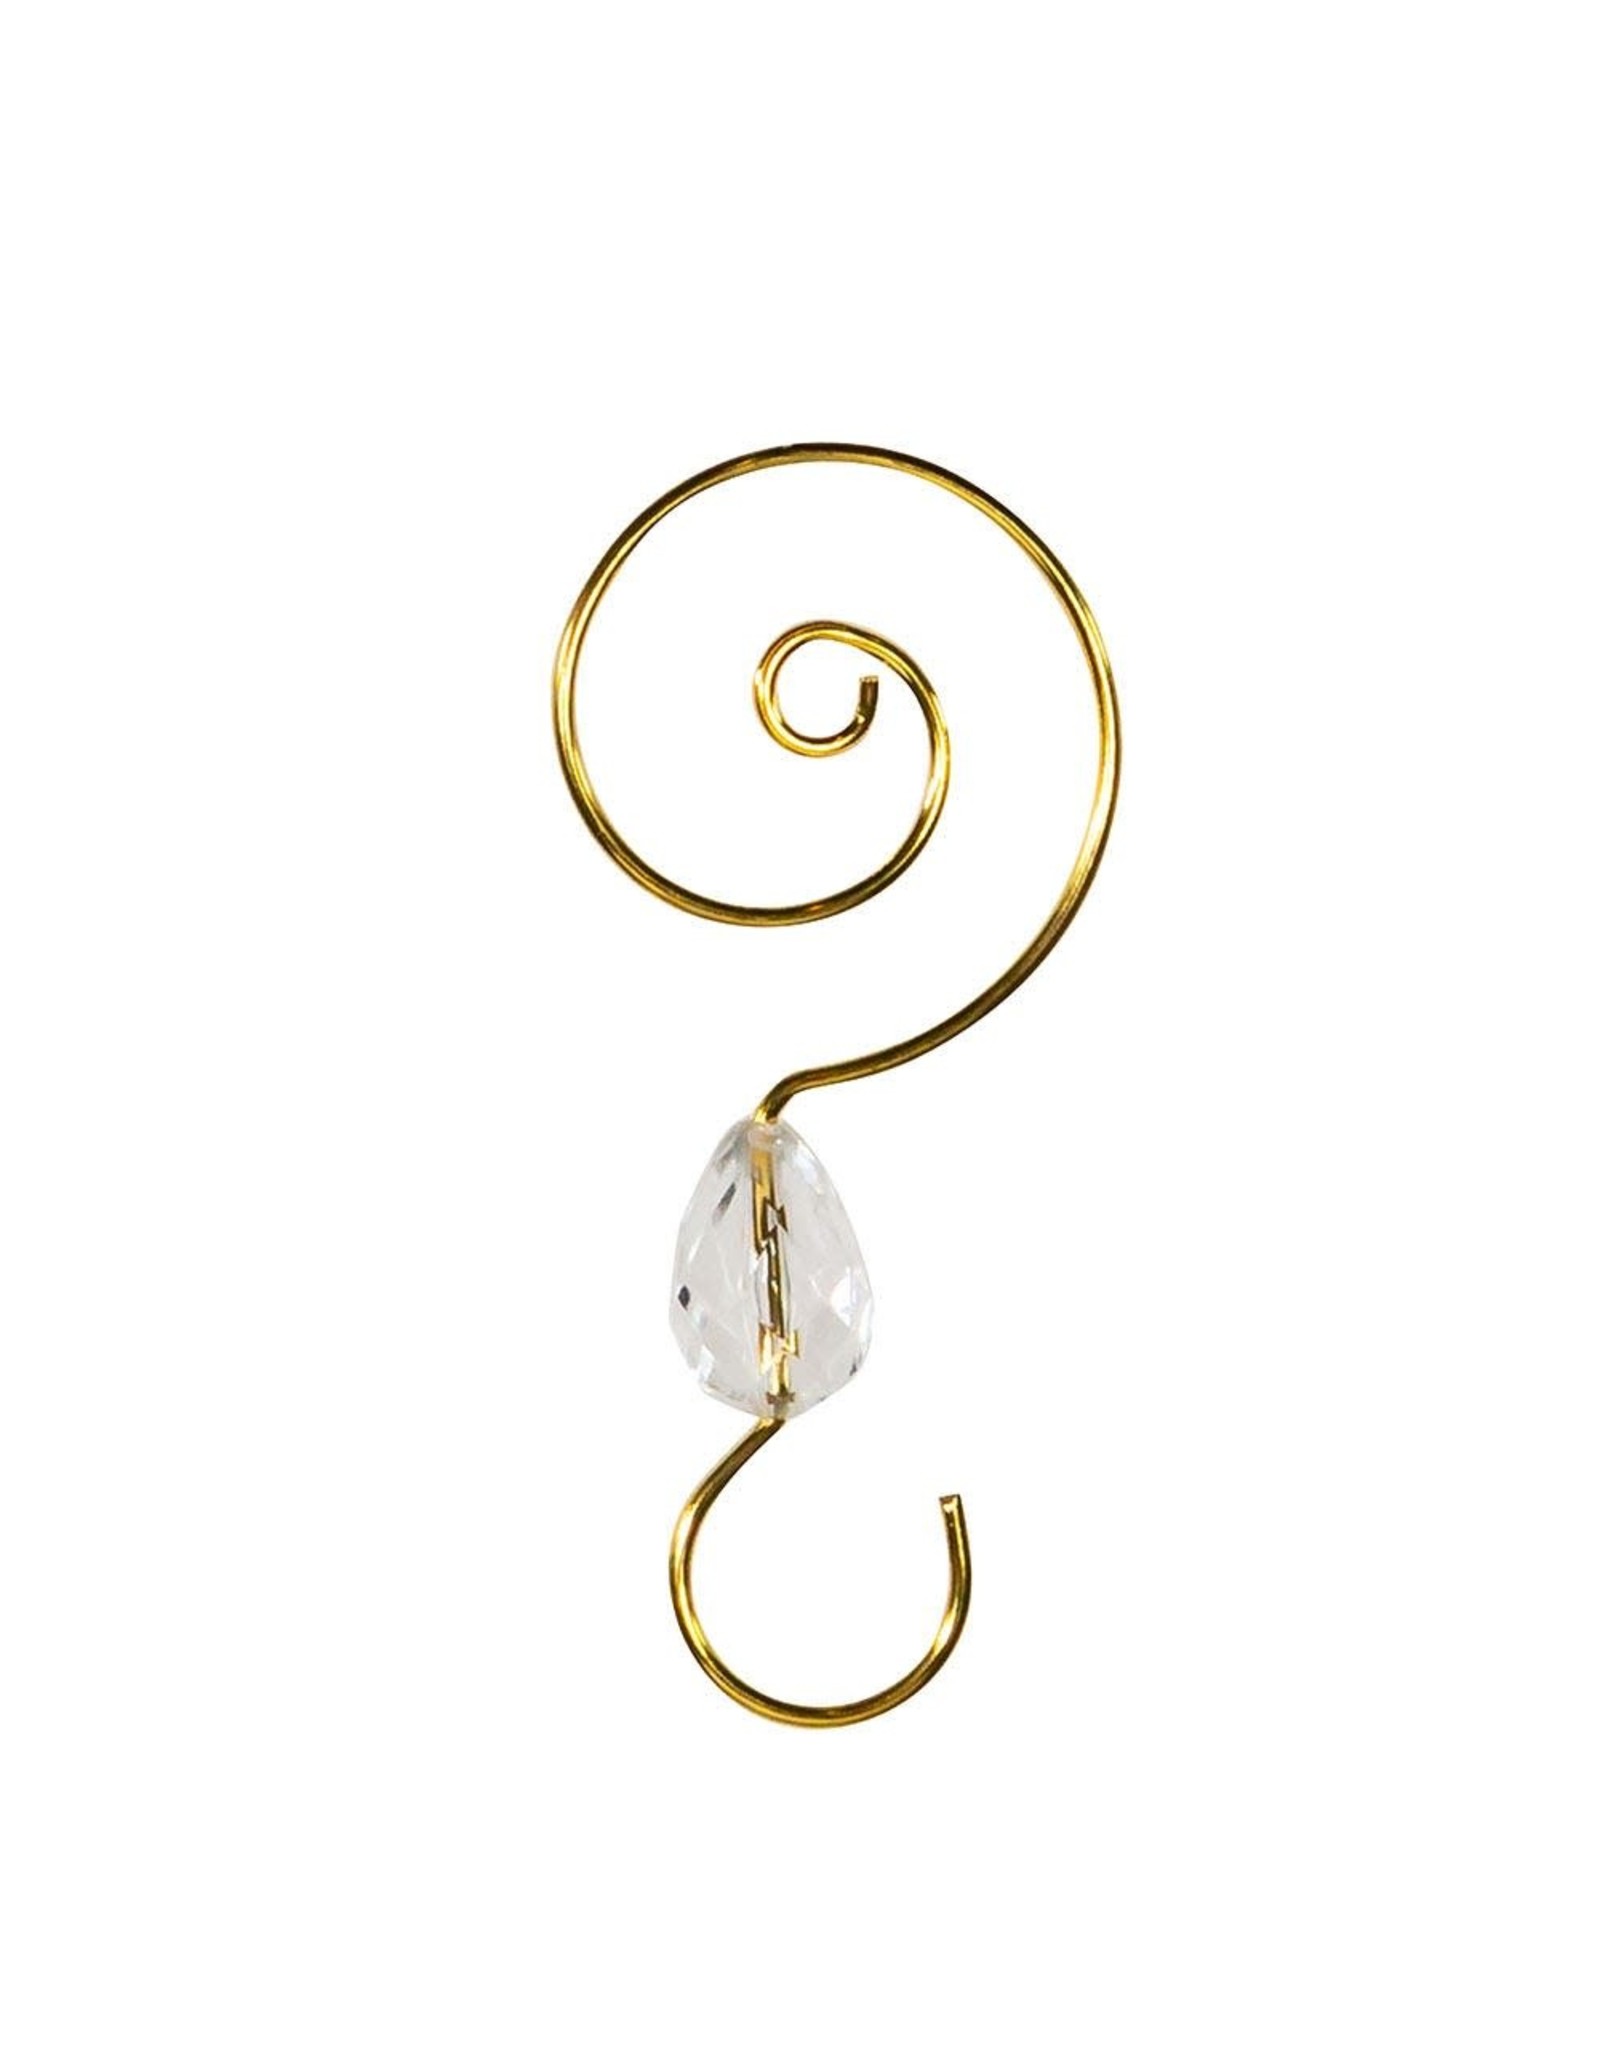 Kurt Adler Christmas Ornament Hooks Gold Wire w Clear Acrylic Jewel 24pc